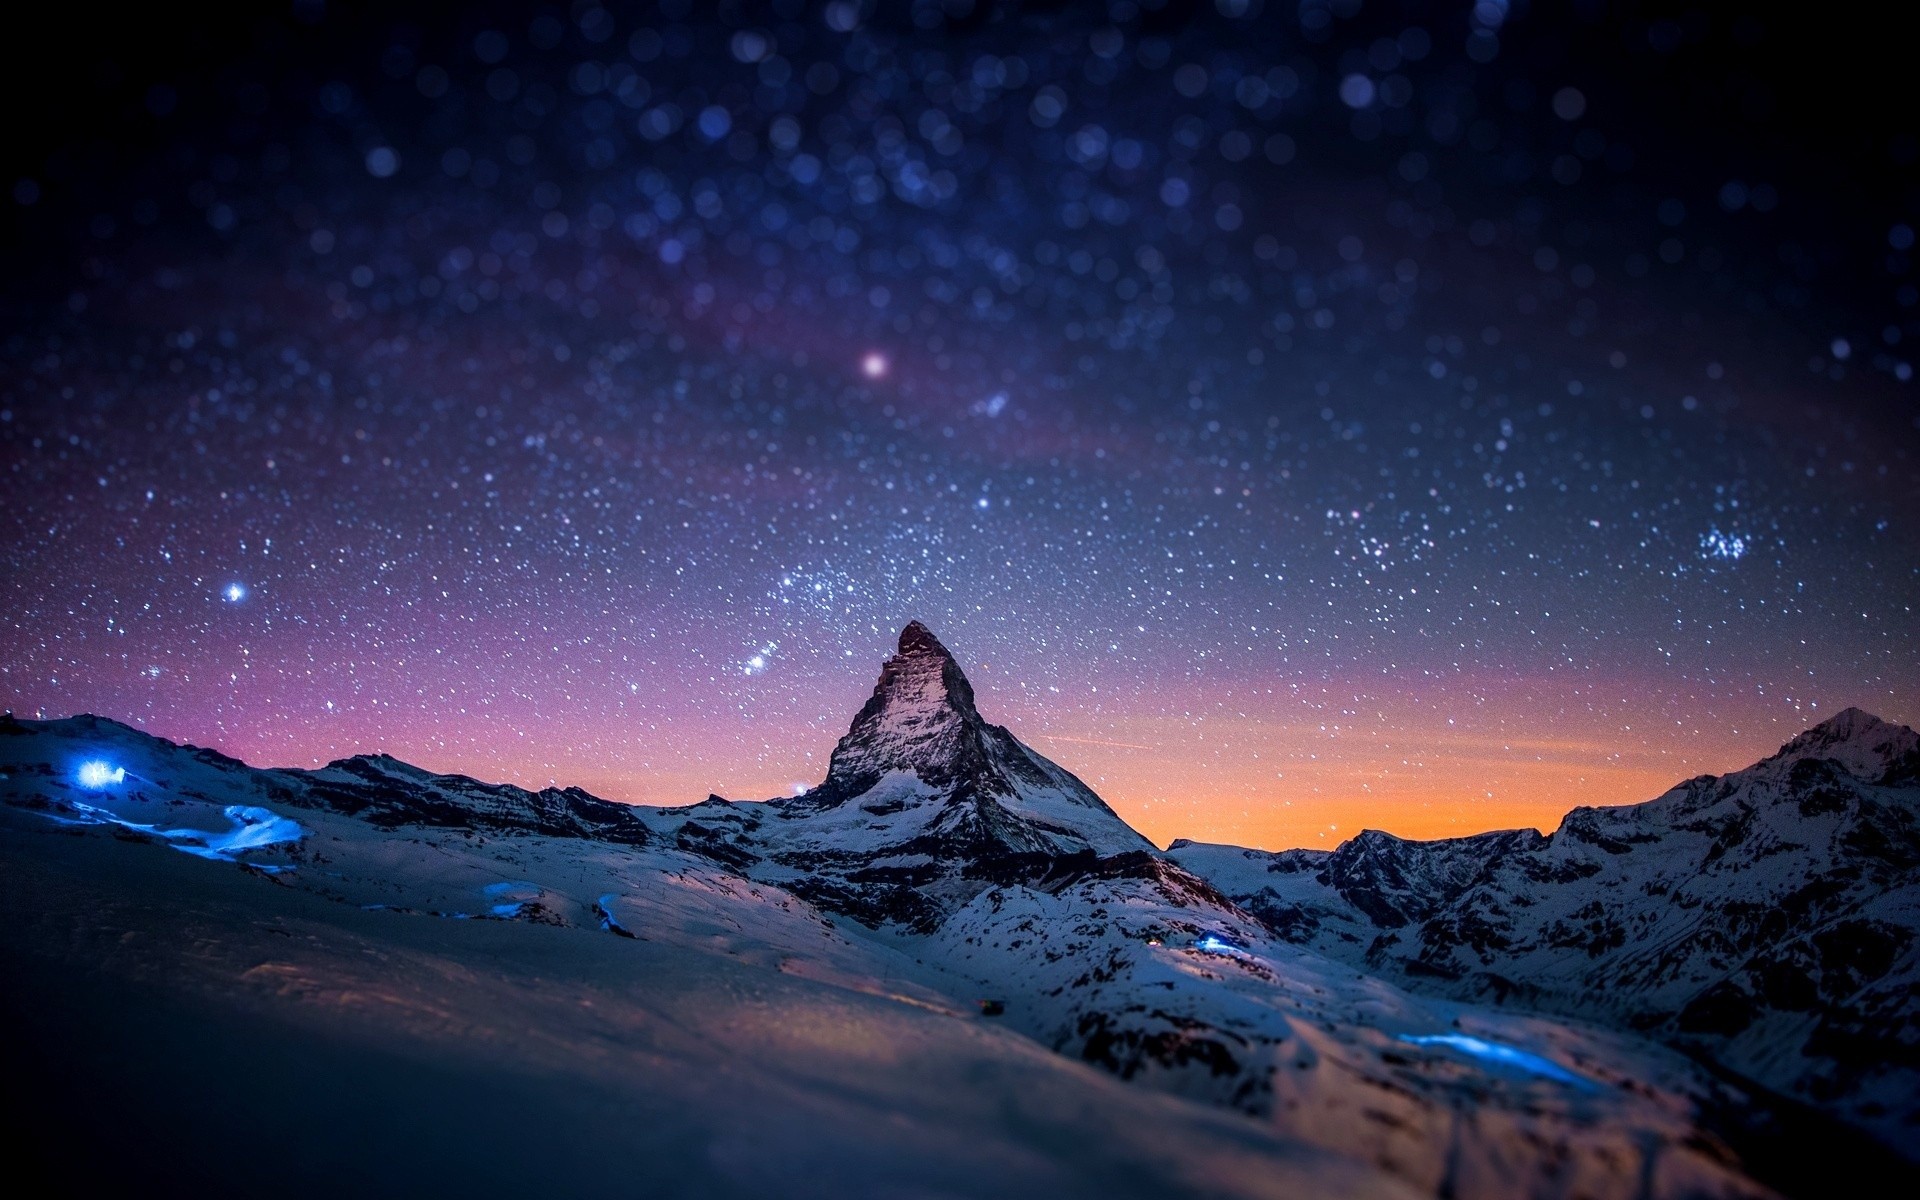 1502120 descargar imagen tierra/naturaleza, matterhorn, montaña, cielo, nieve, cielo estrellado, suiza: fondos de pantalla y protectores de pantalla gratis